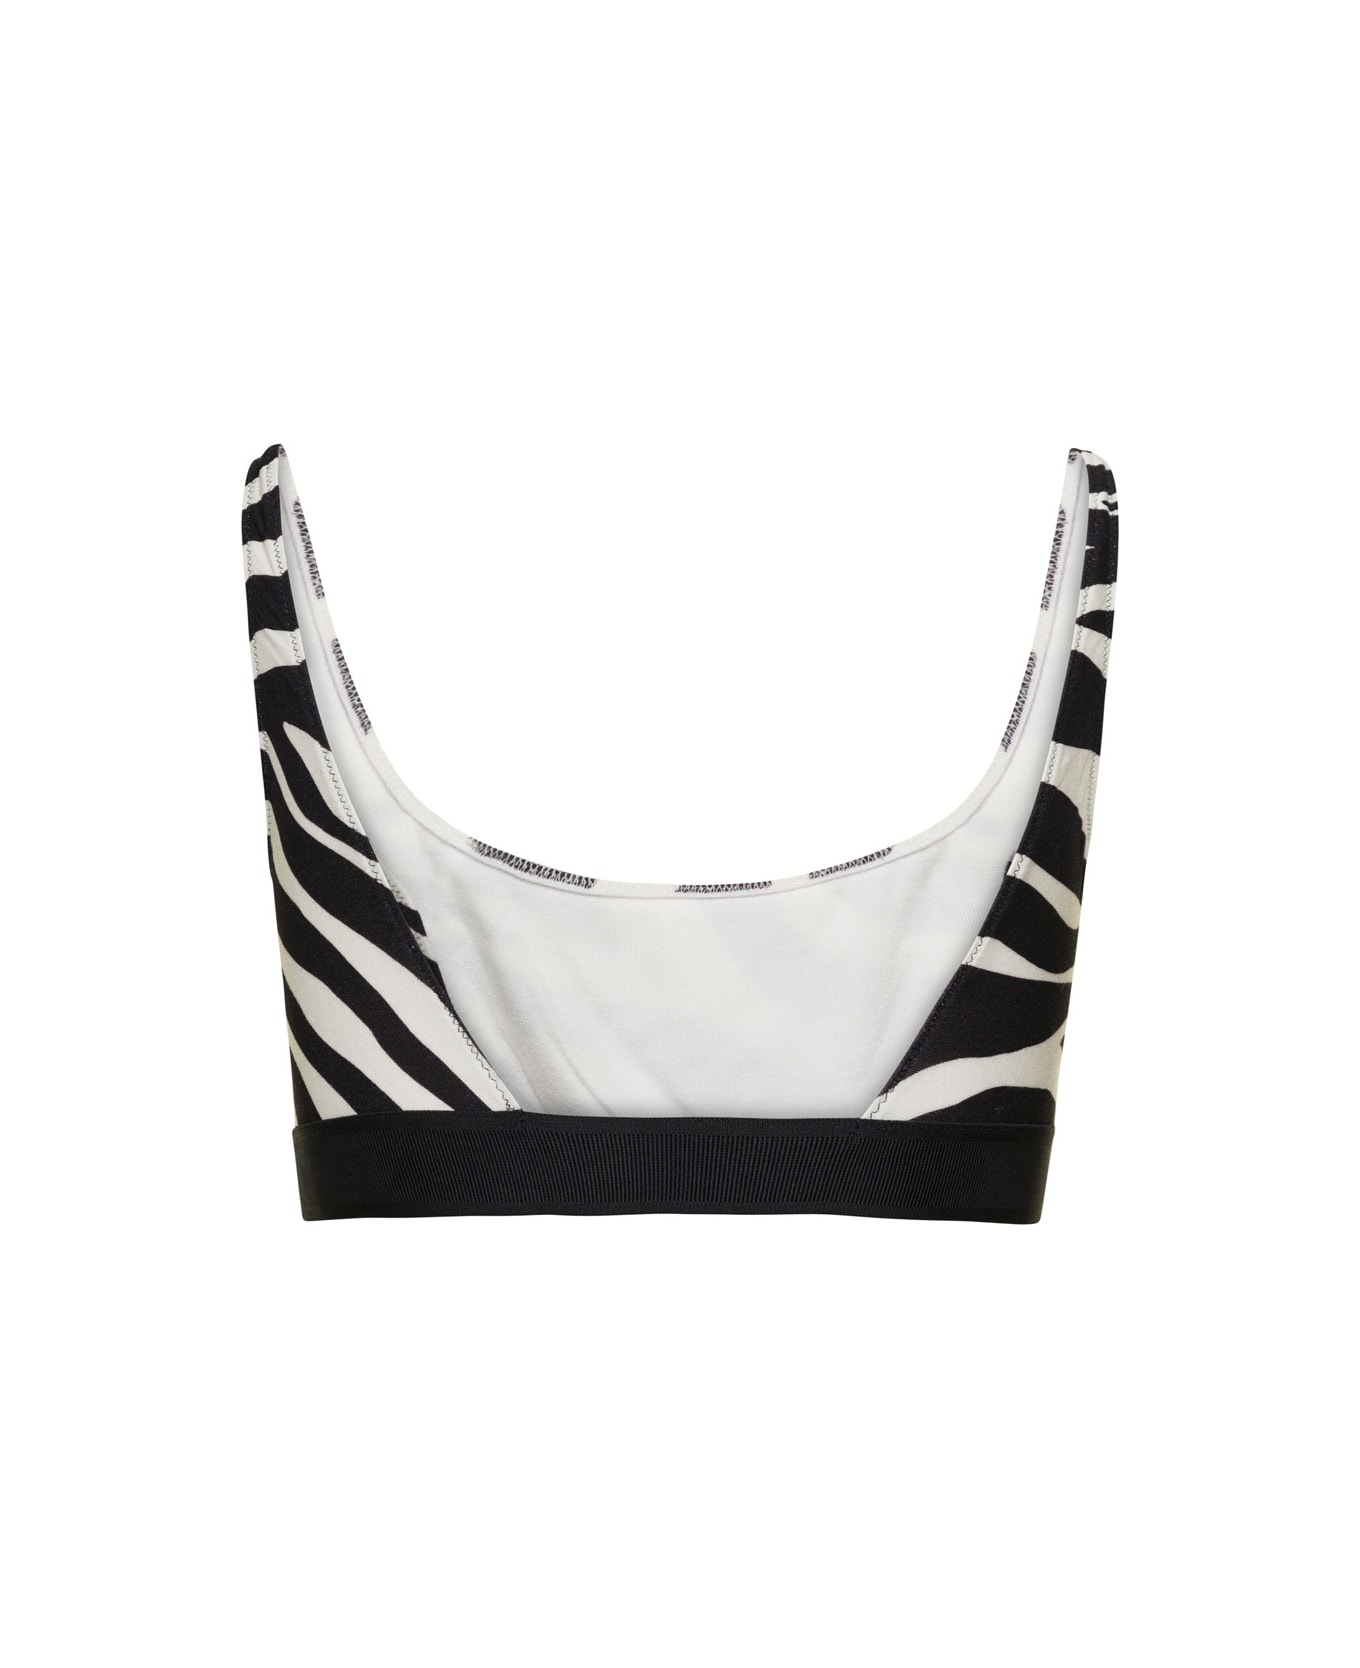 Tom Ford Black And White Zebra-striped Bralette In Techno Fabric Stretch Woman - White/black